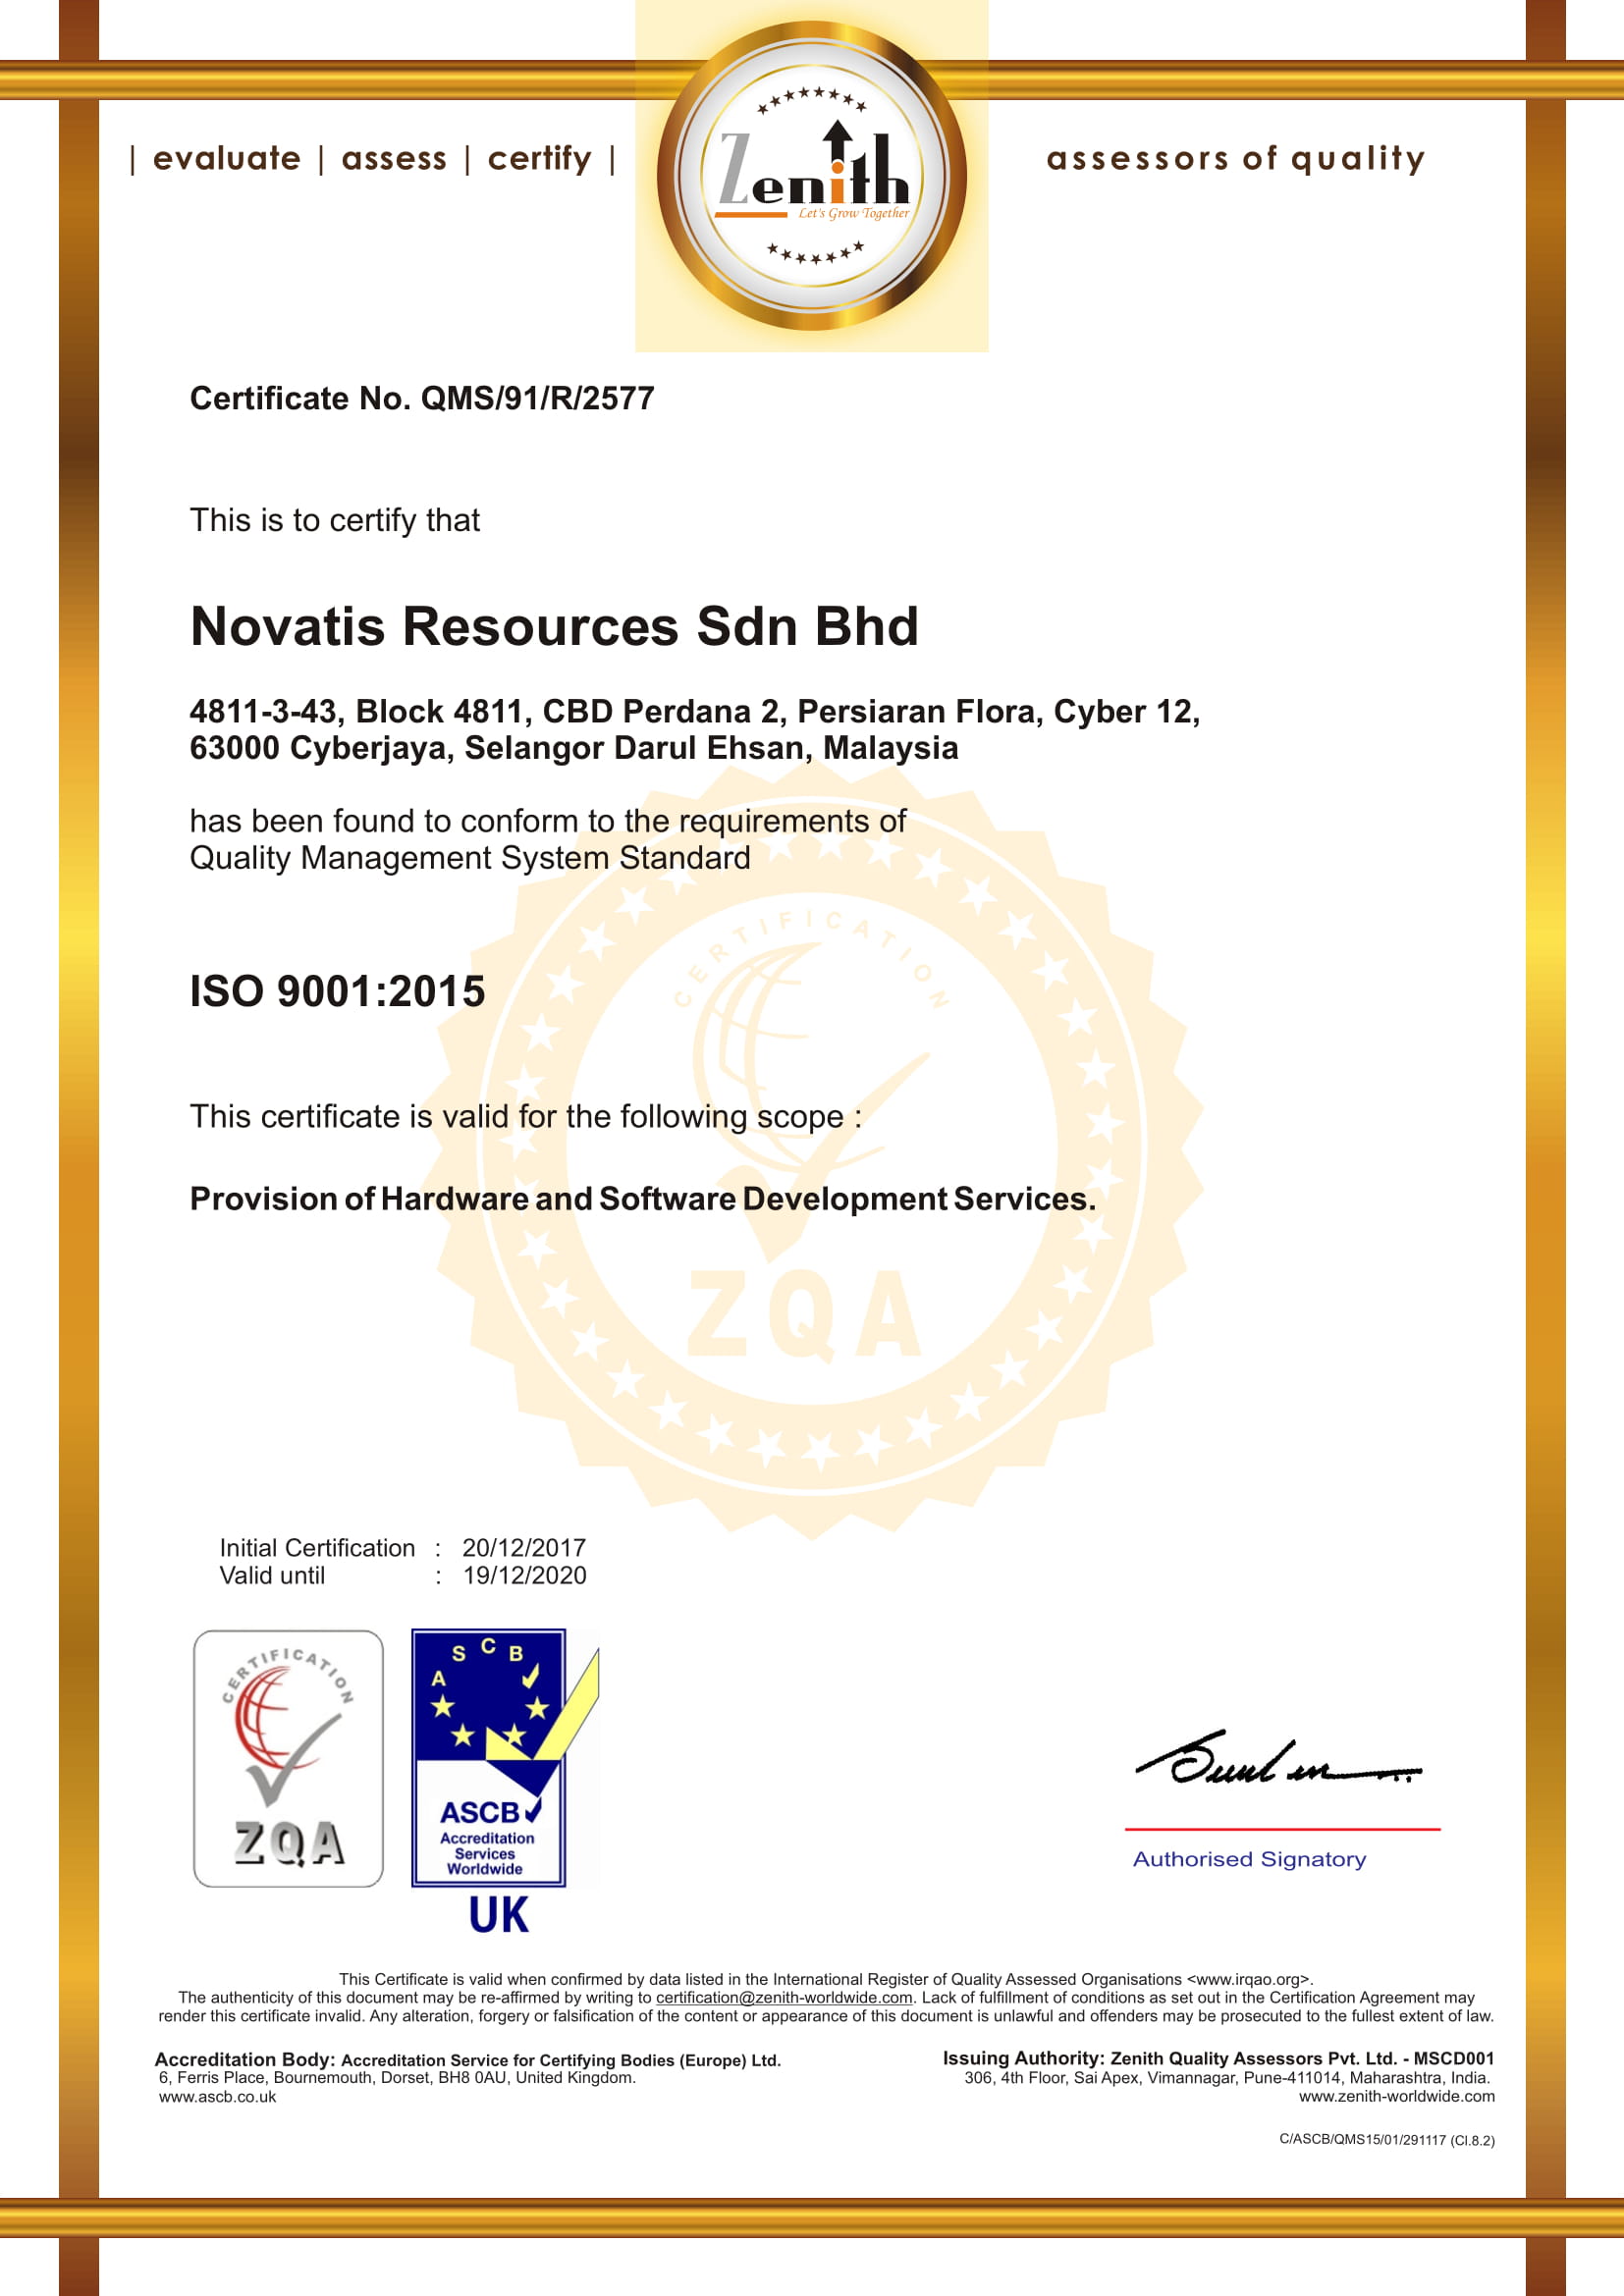 Novatis Resources Sdn Bhd - RavenfvGould